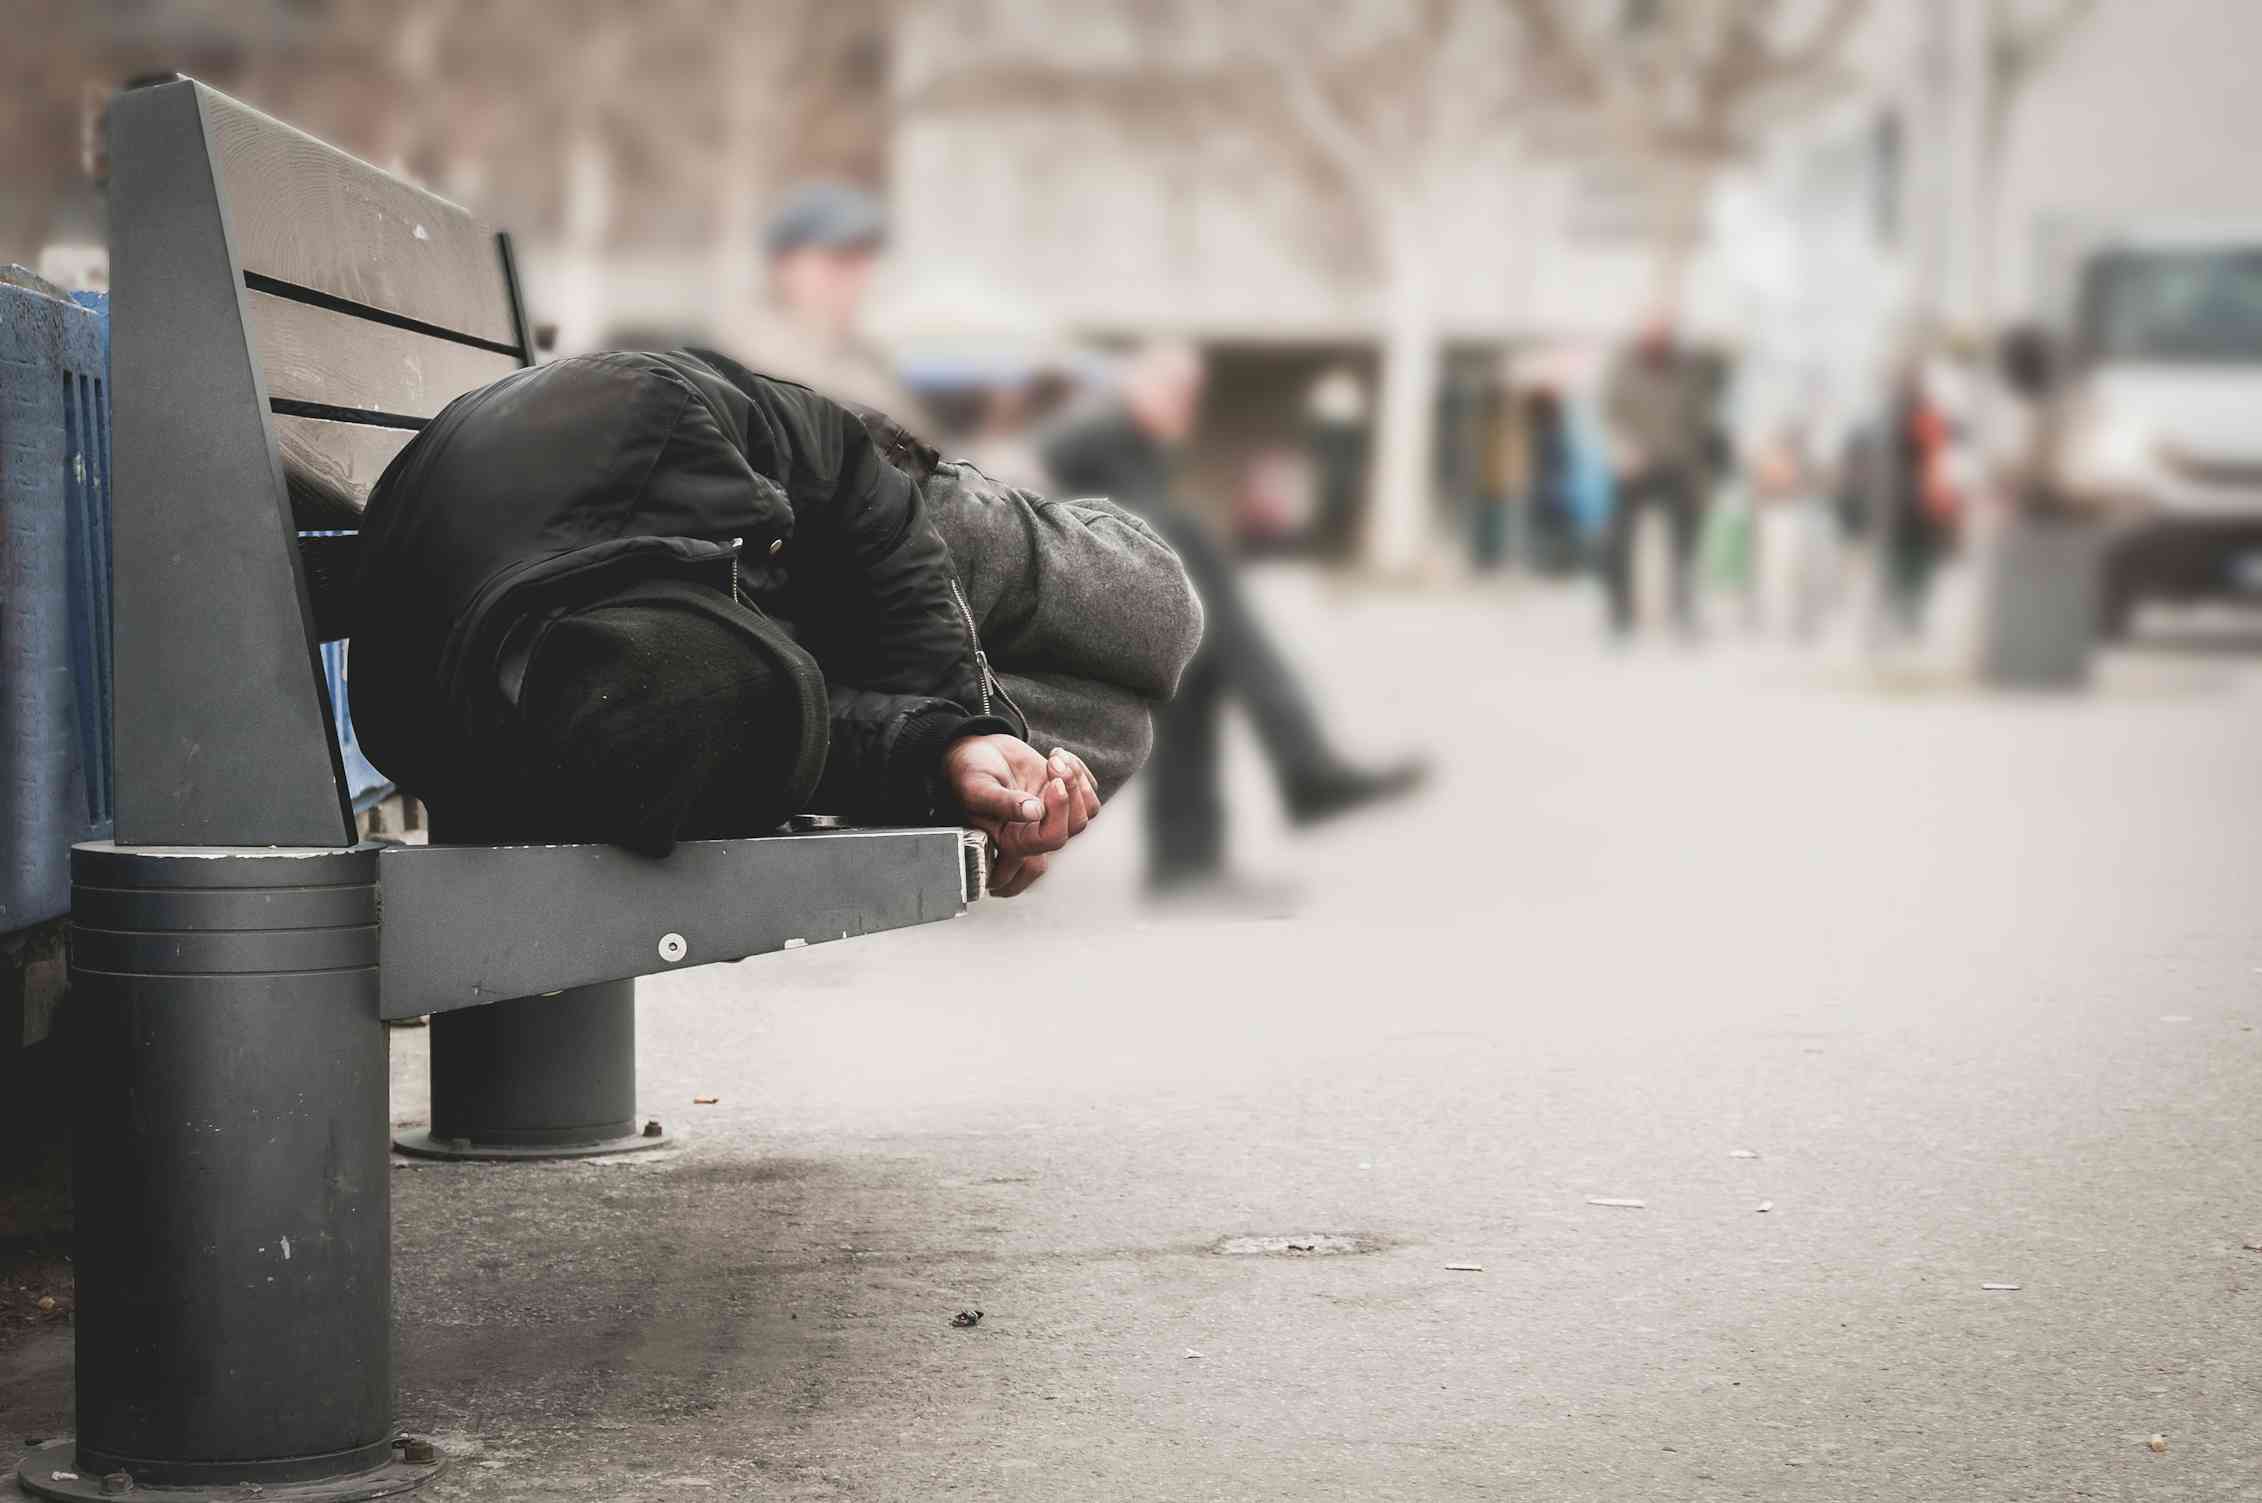 A man lying on a bench